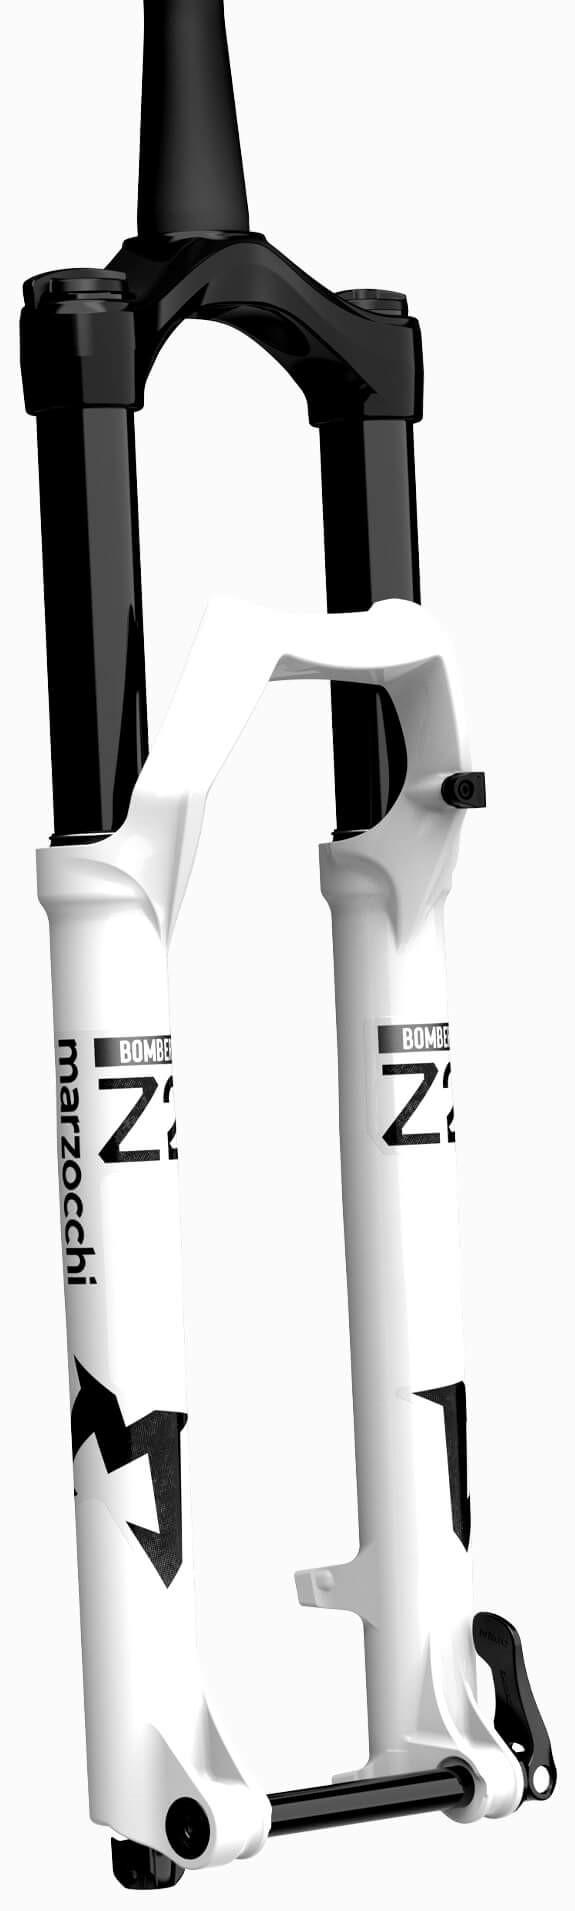 Bomber Z2 Limited Edition Boost Fork - White/black